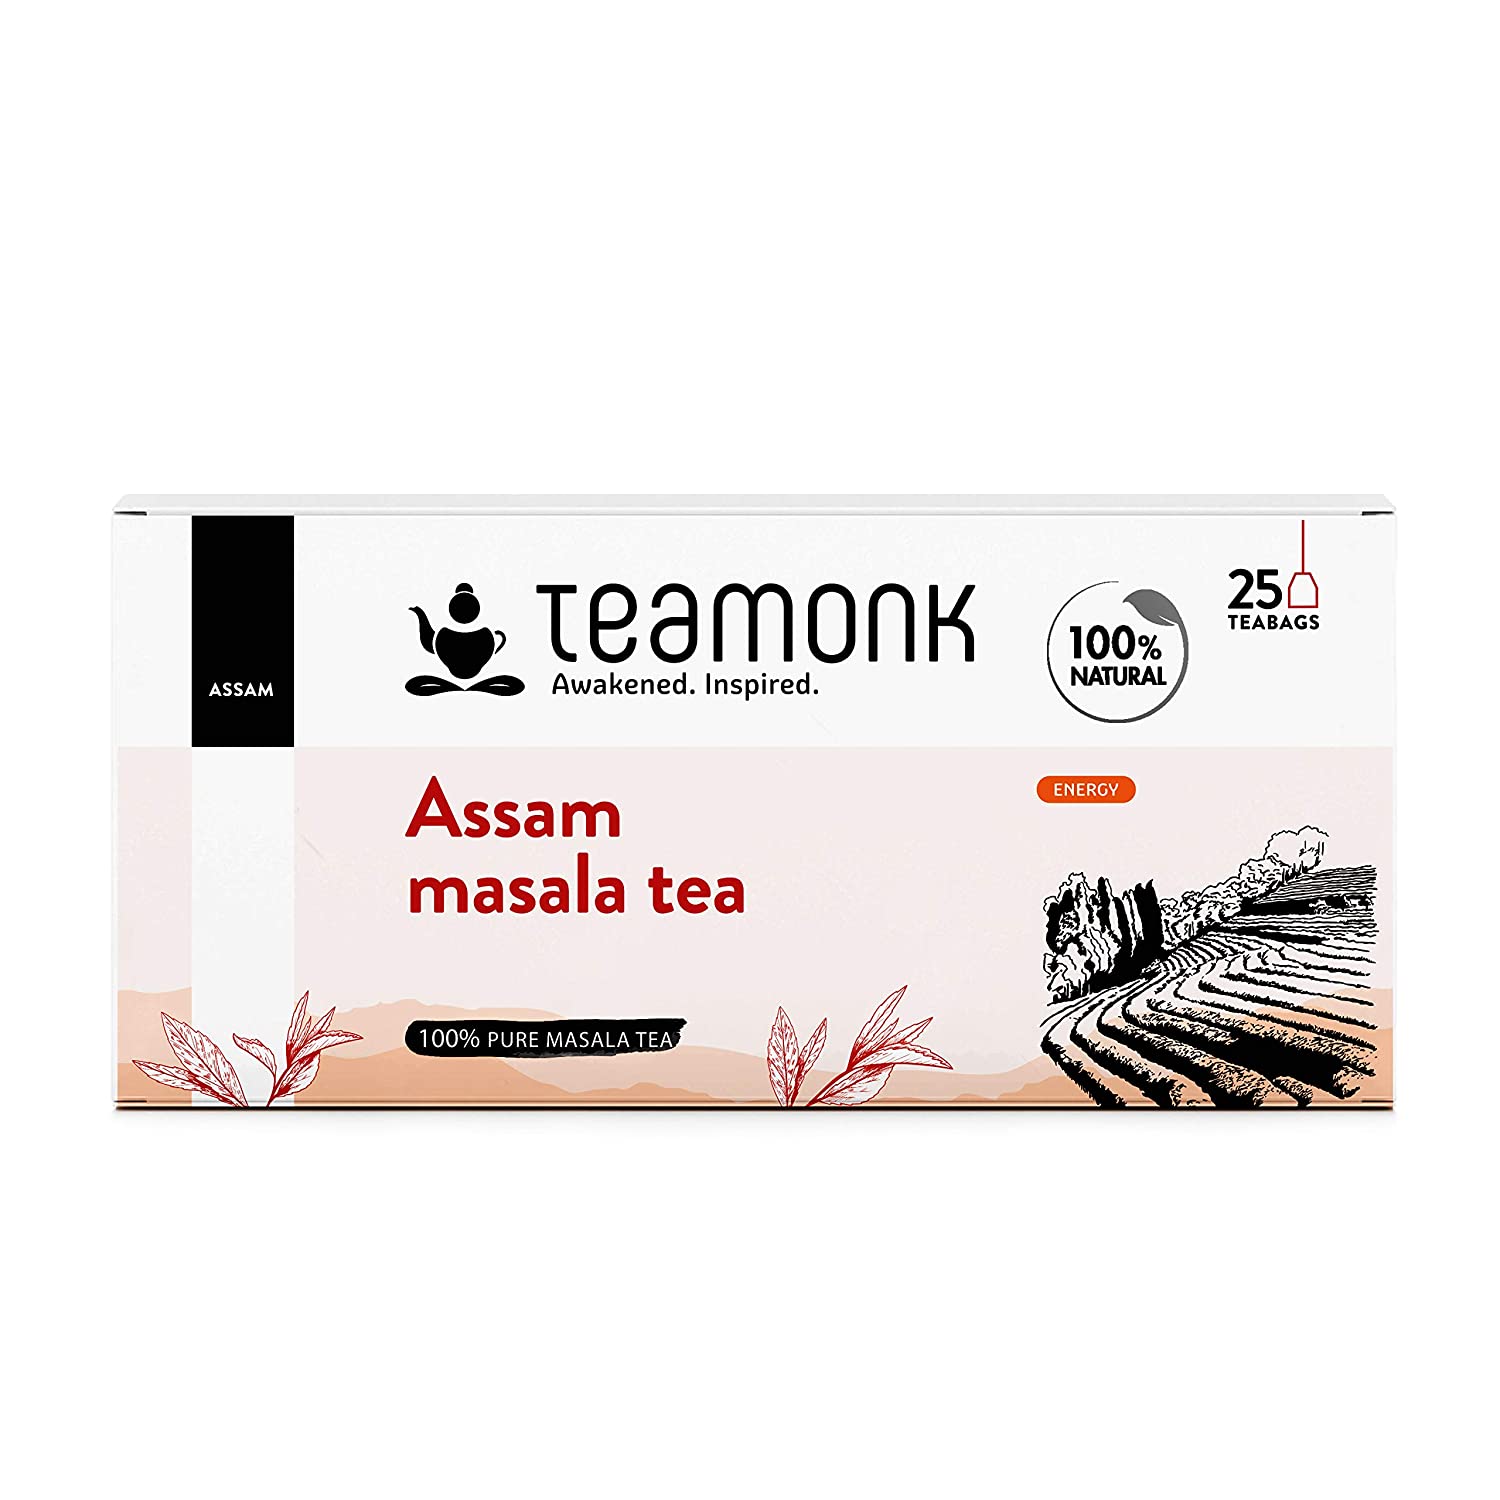 Teamonk Assam Masala Tea Image